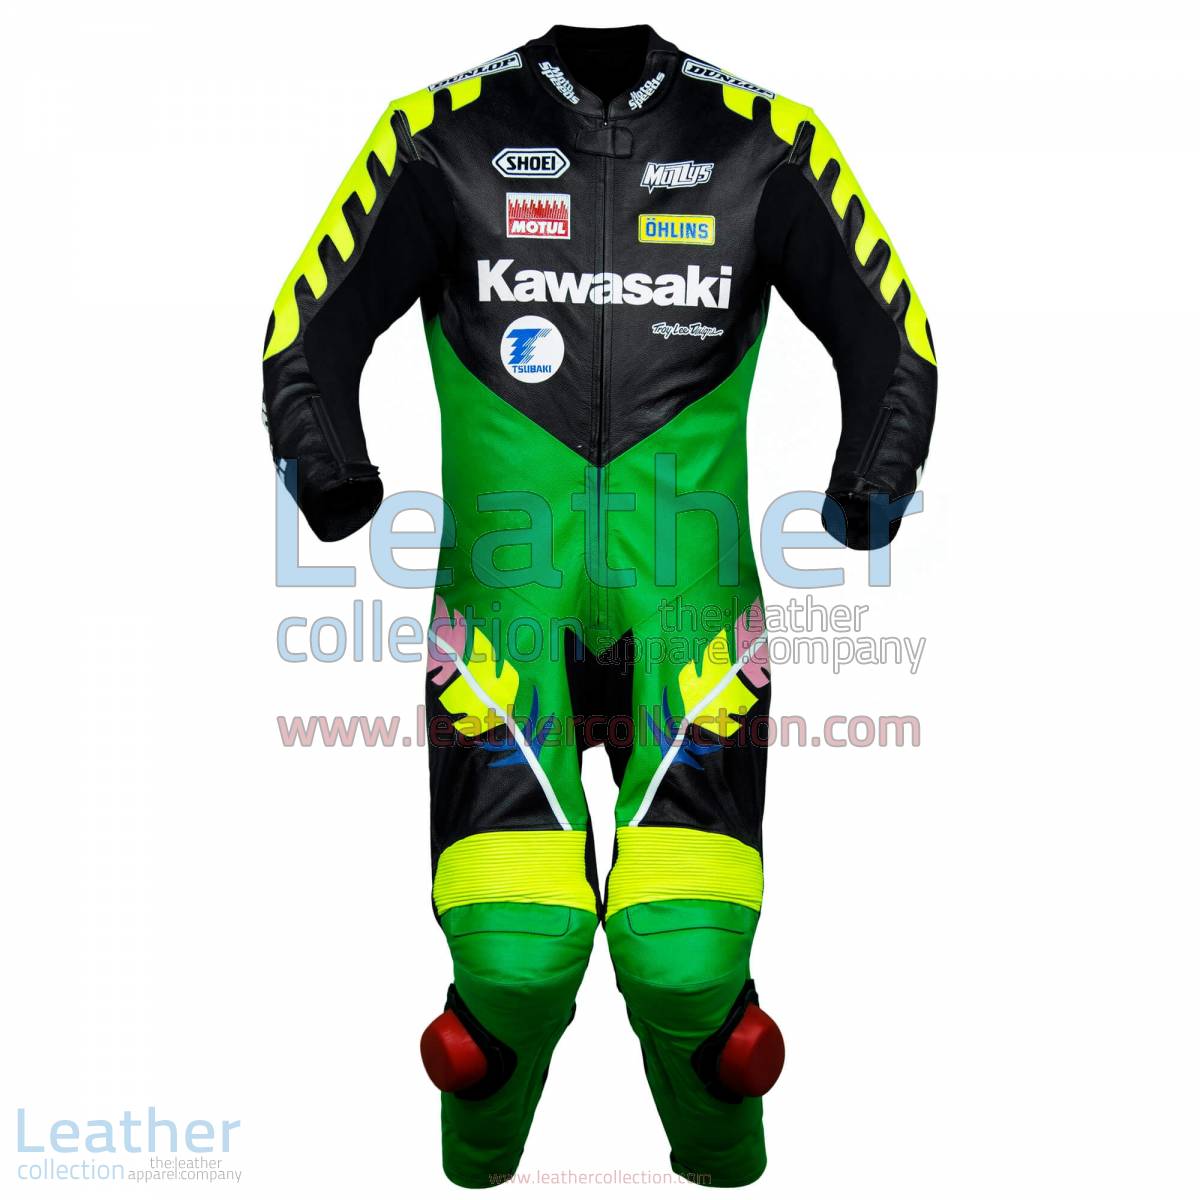 Scott Russell Kawasaki GP 1993 Leather Suit | kawasaki clothing,kawasaki leather suit